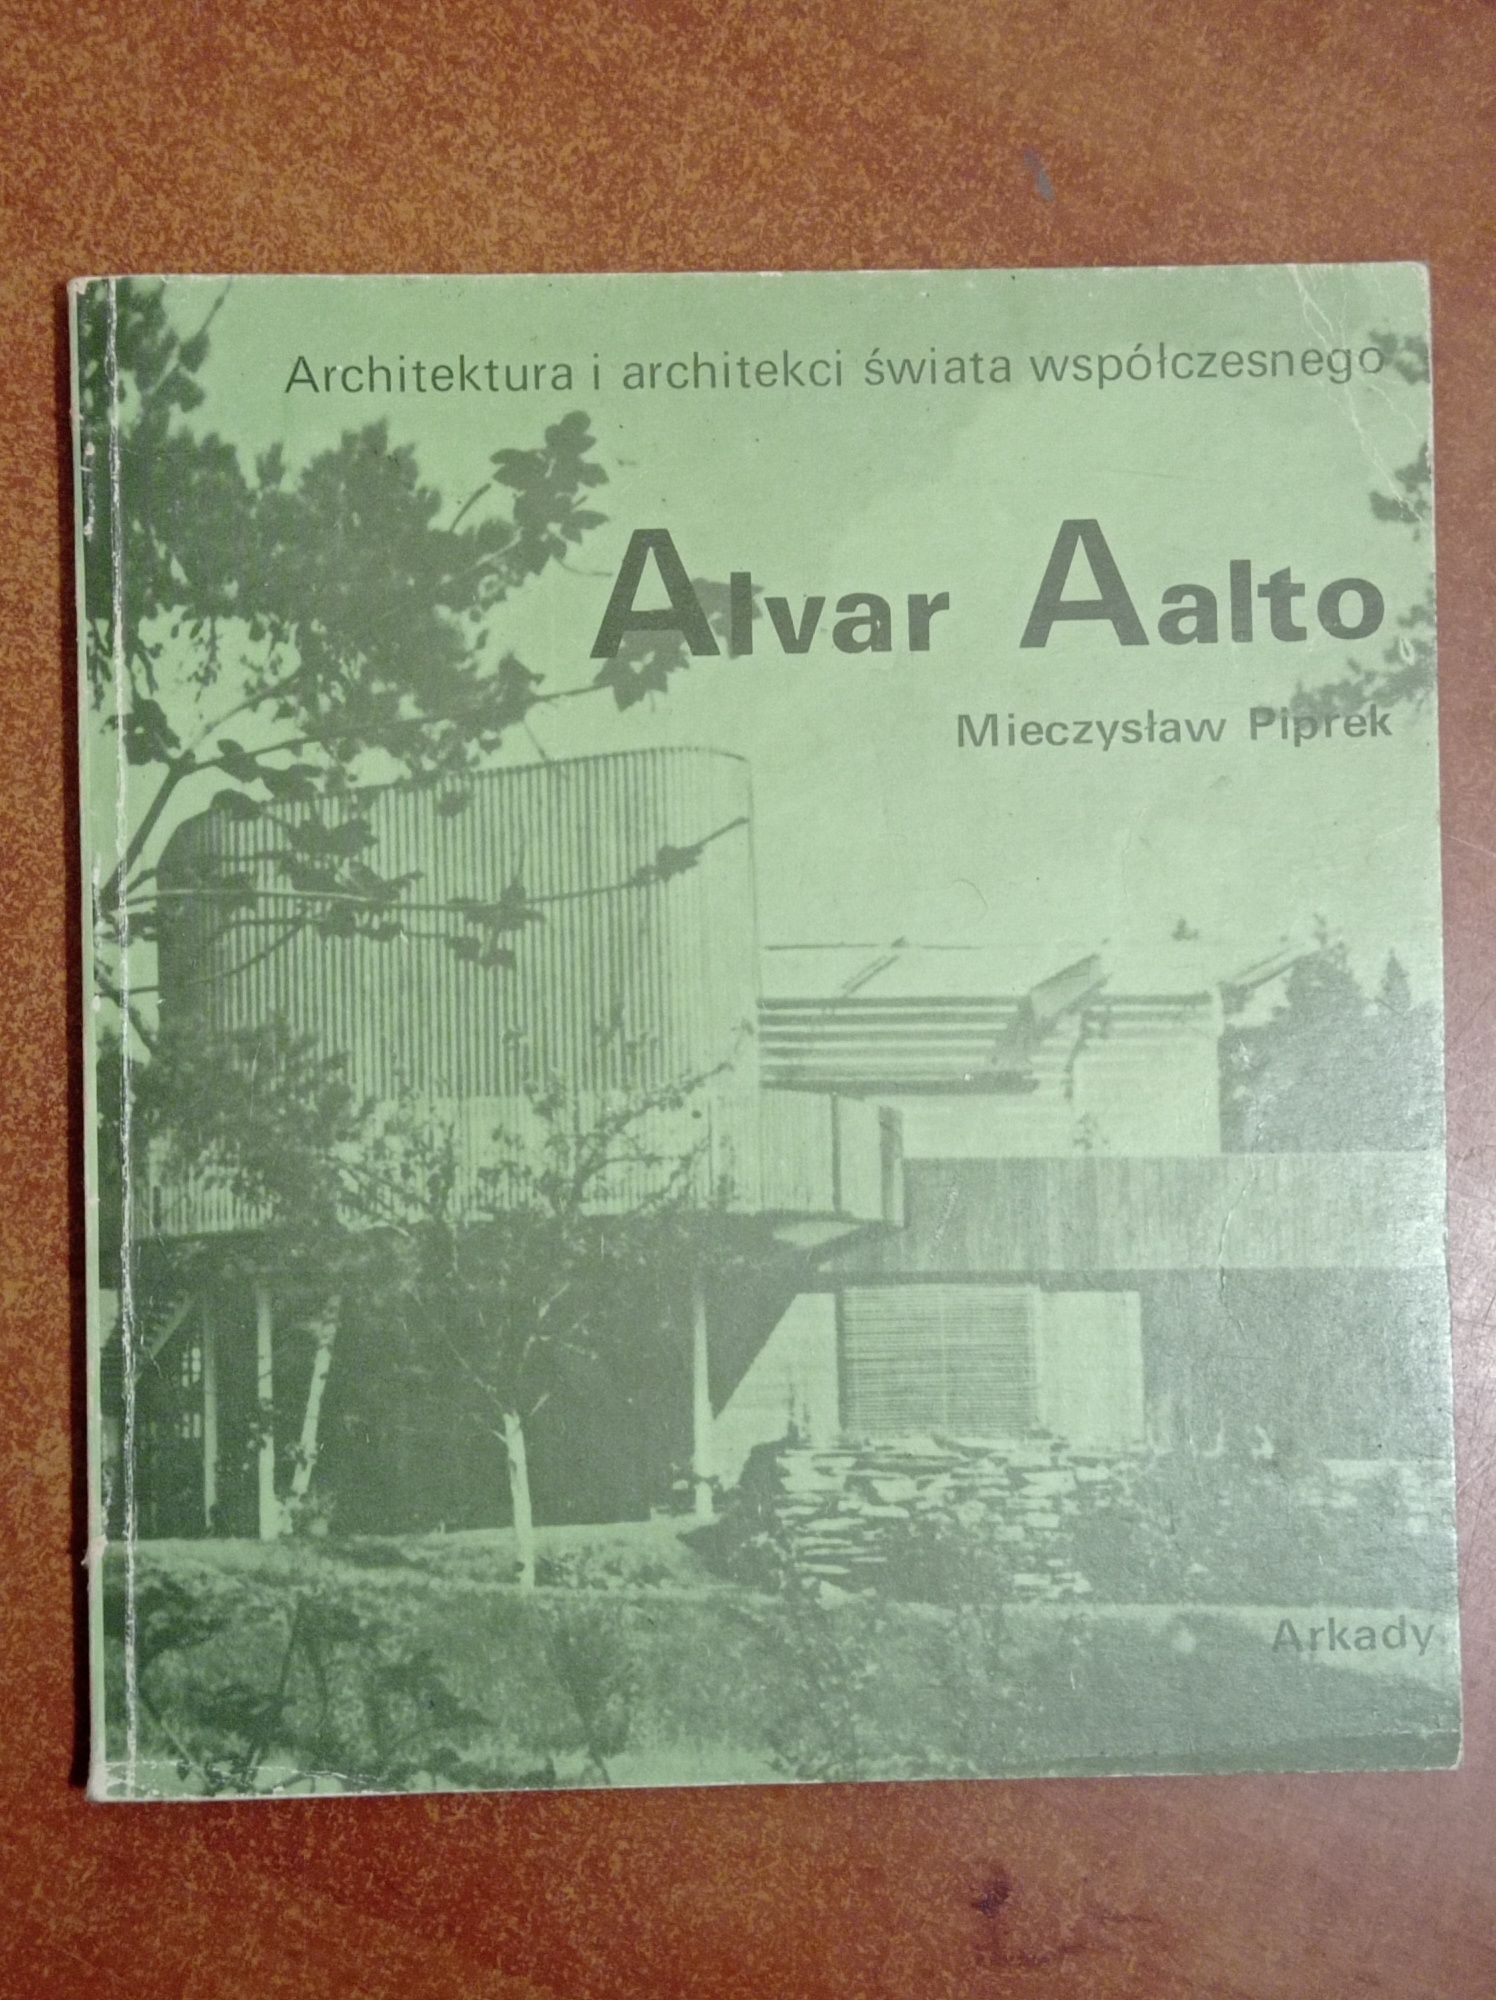 3 książki Vademecum sternika motorowodnego Alvar Aalto Trasy off-road